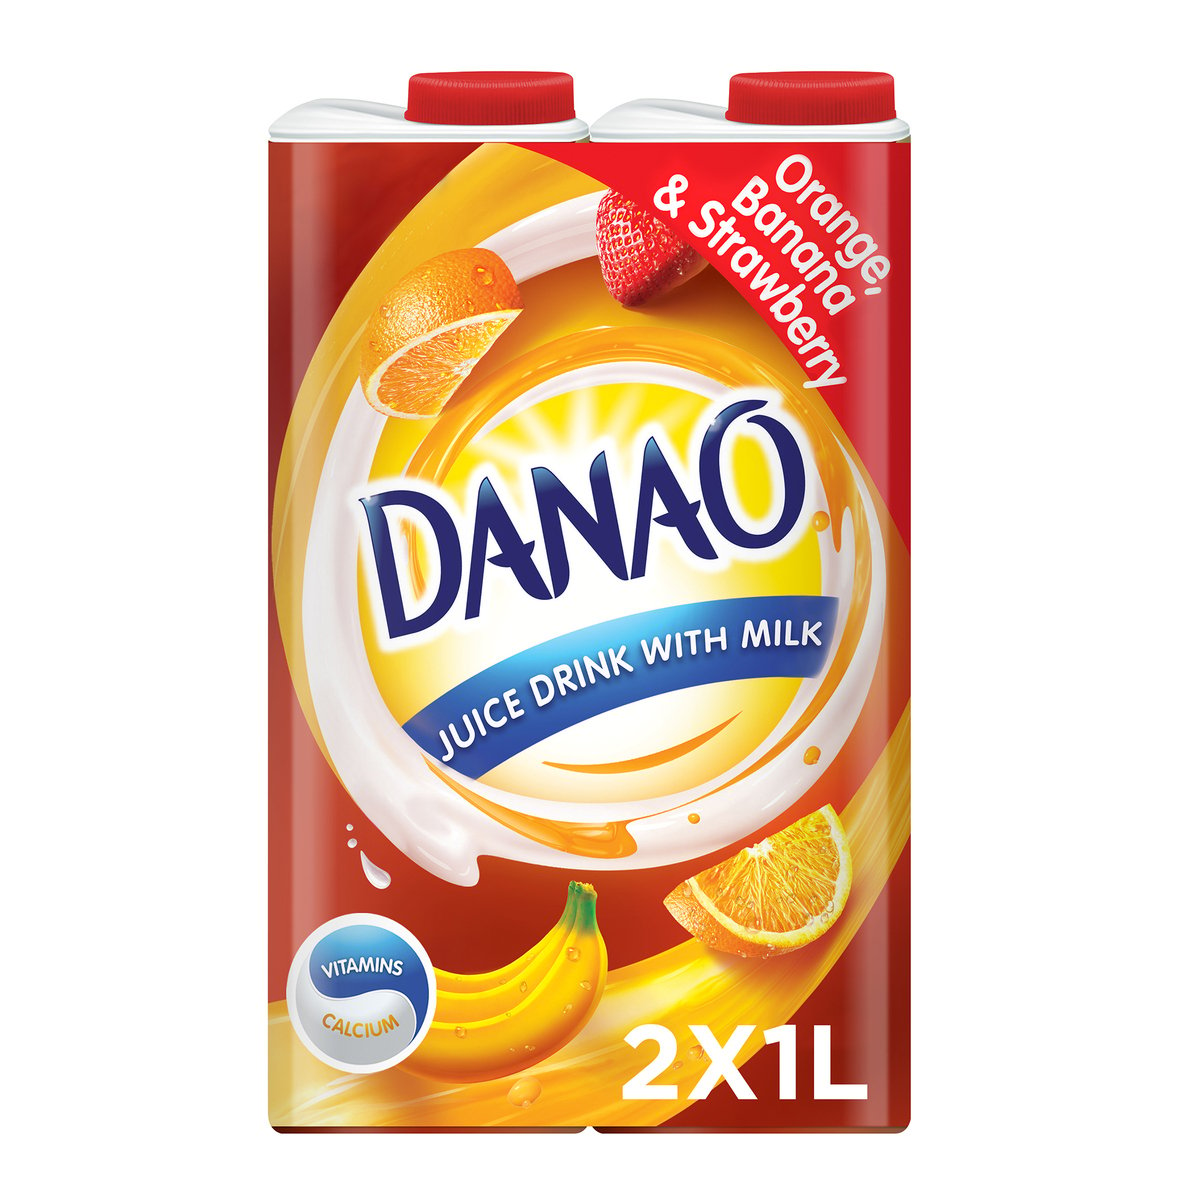 Danao Juice Drink with Milk Orange-Banana & Strawberry 2 x 1 Litre